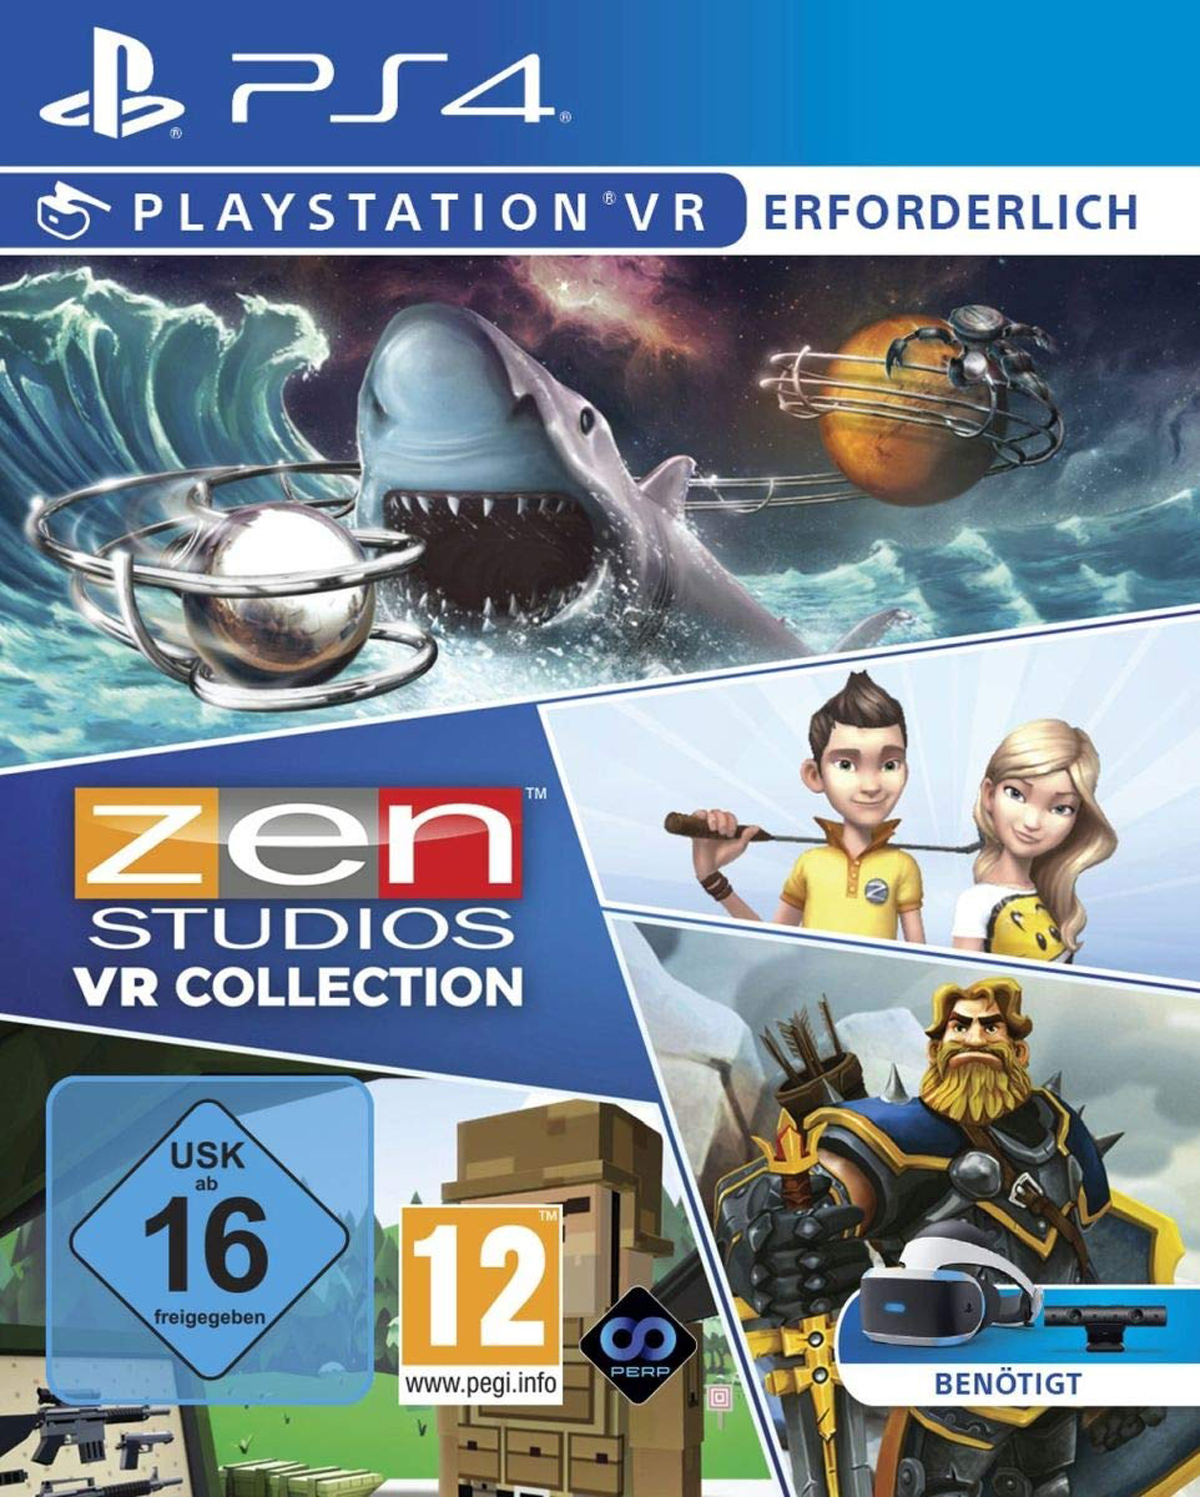 Studios - Zen Collection VR [PlayStation 4]